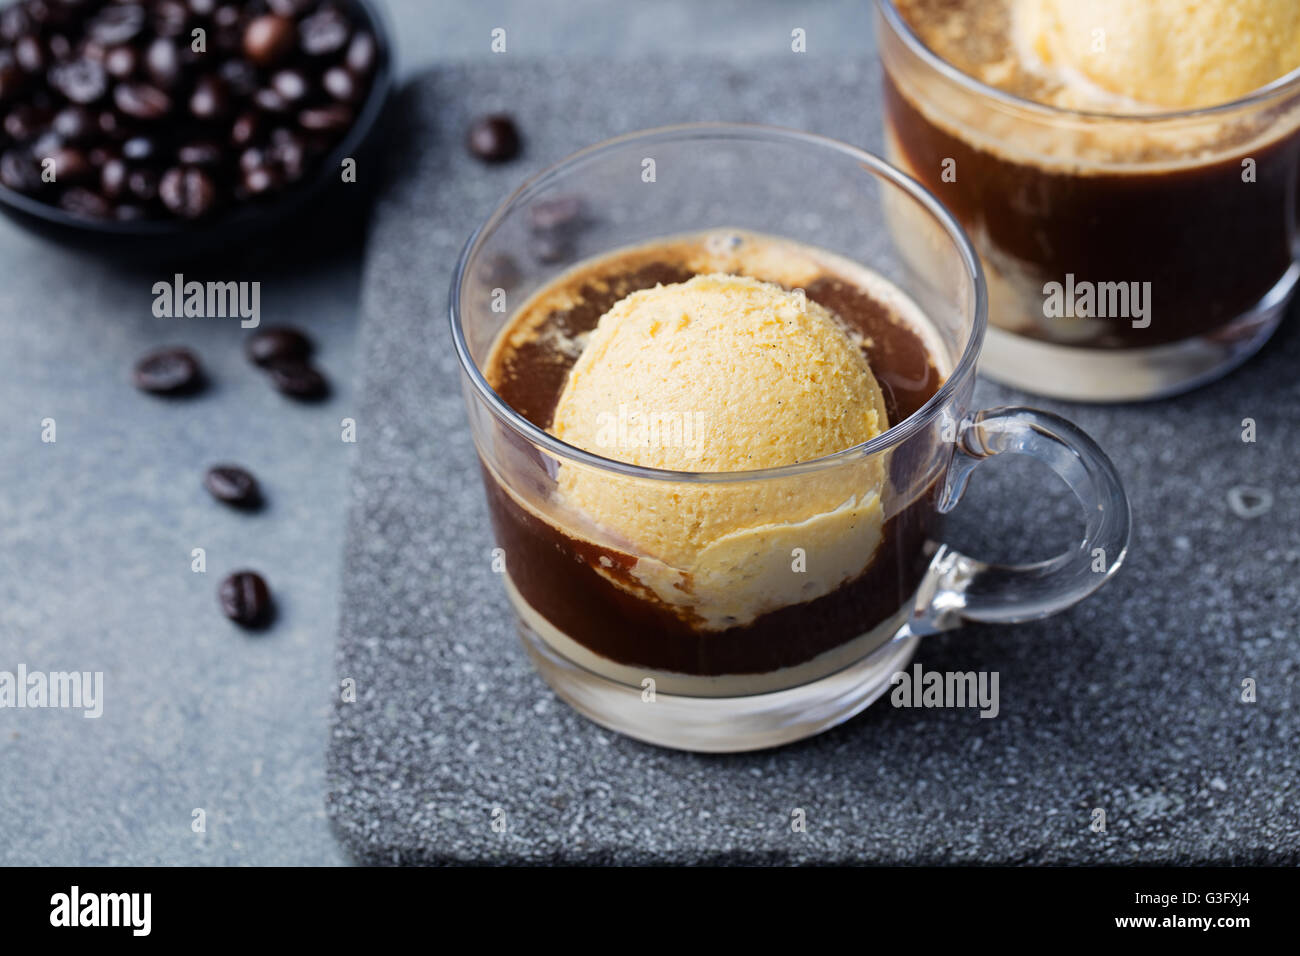 https://c8.alamy.com/comp/G3FXJ4/affogato-coffee-with-ice-cream-on-a-glass-cup-G3FXJ4.jpg